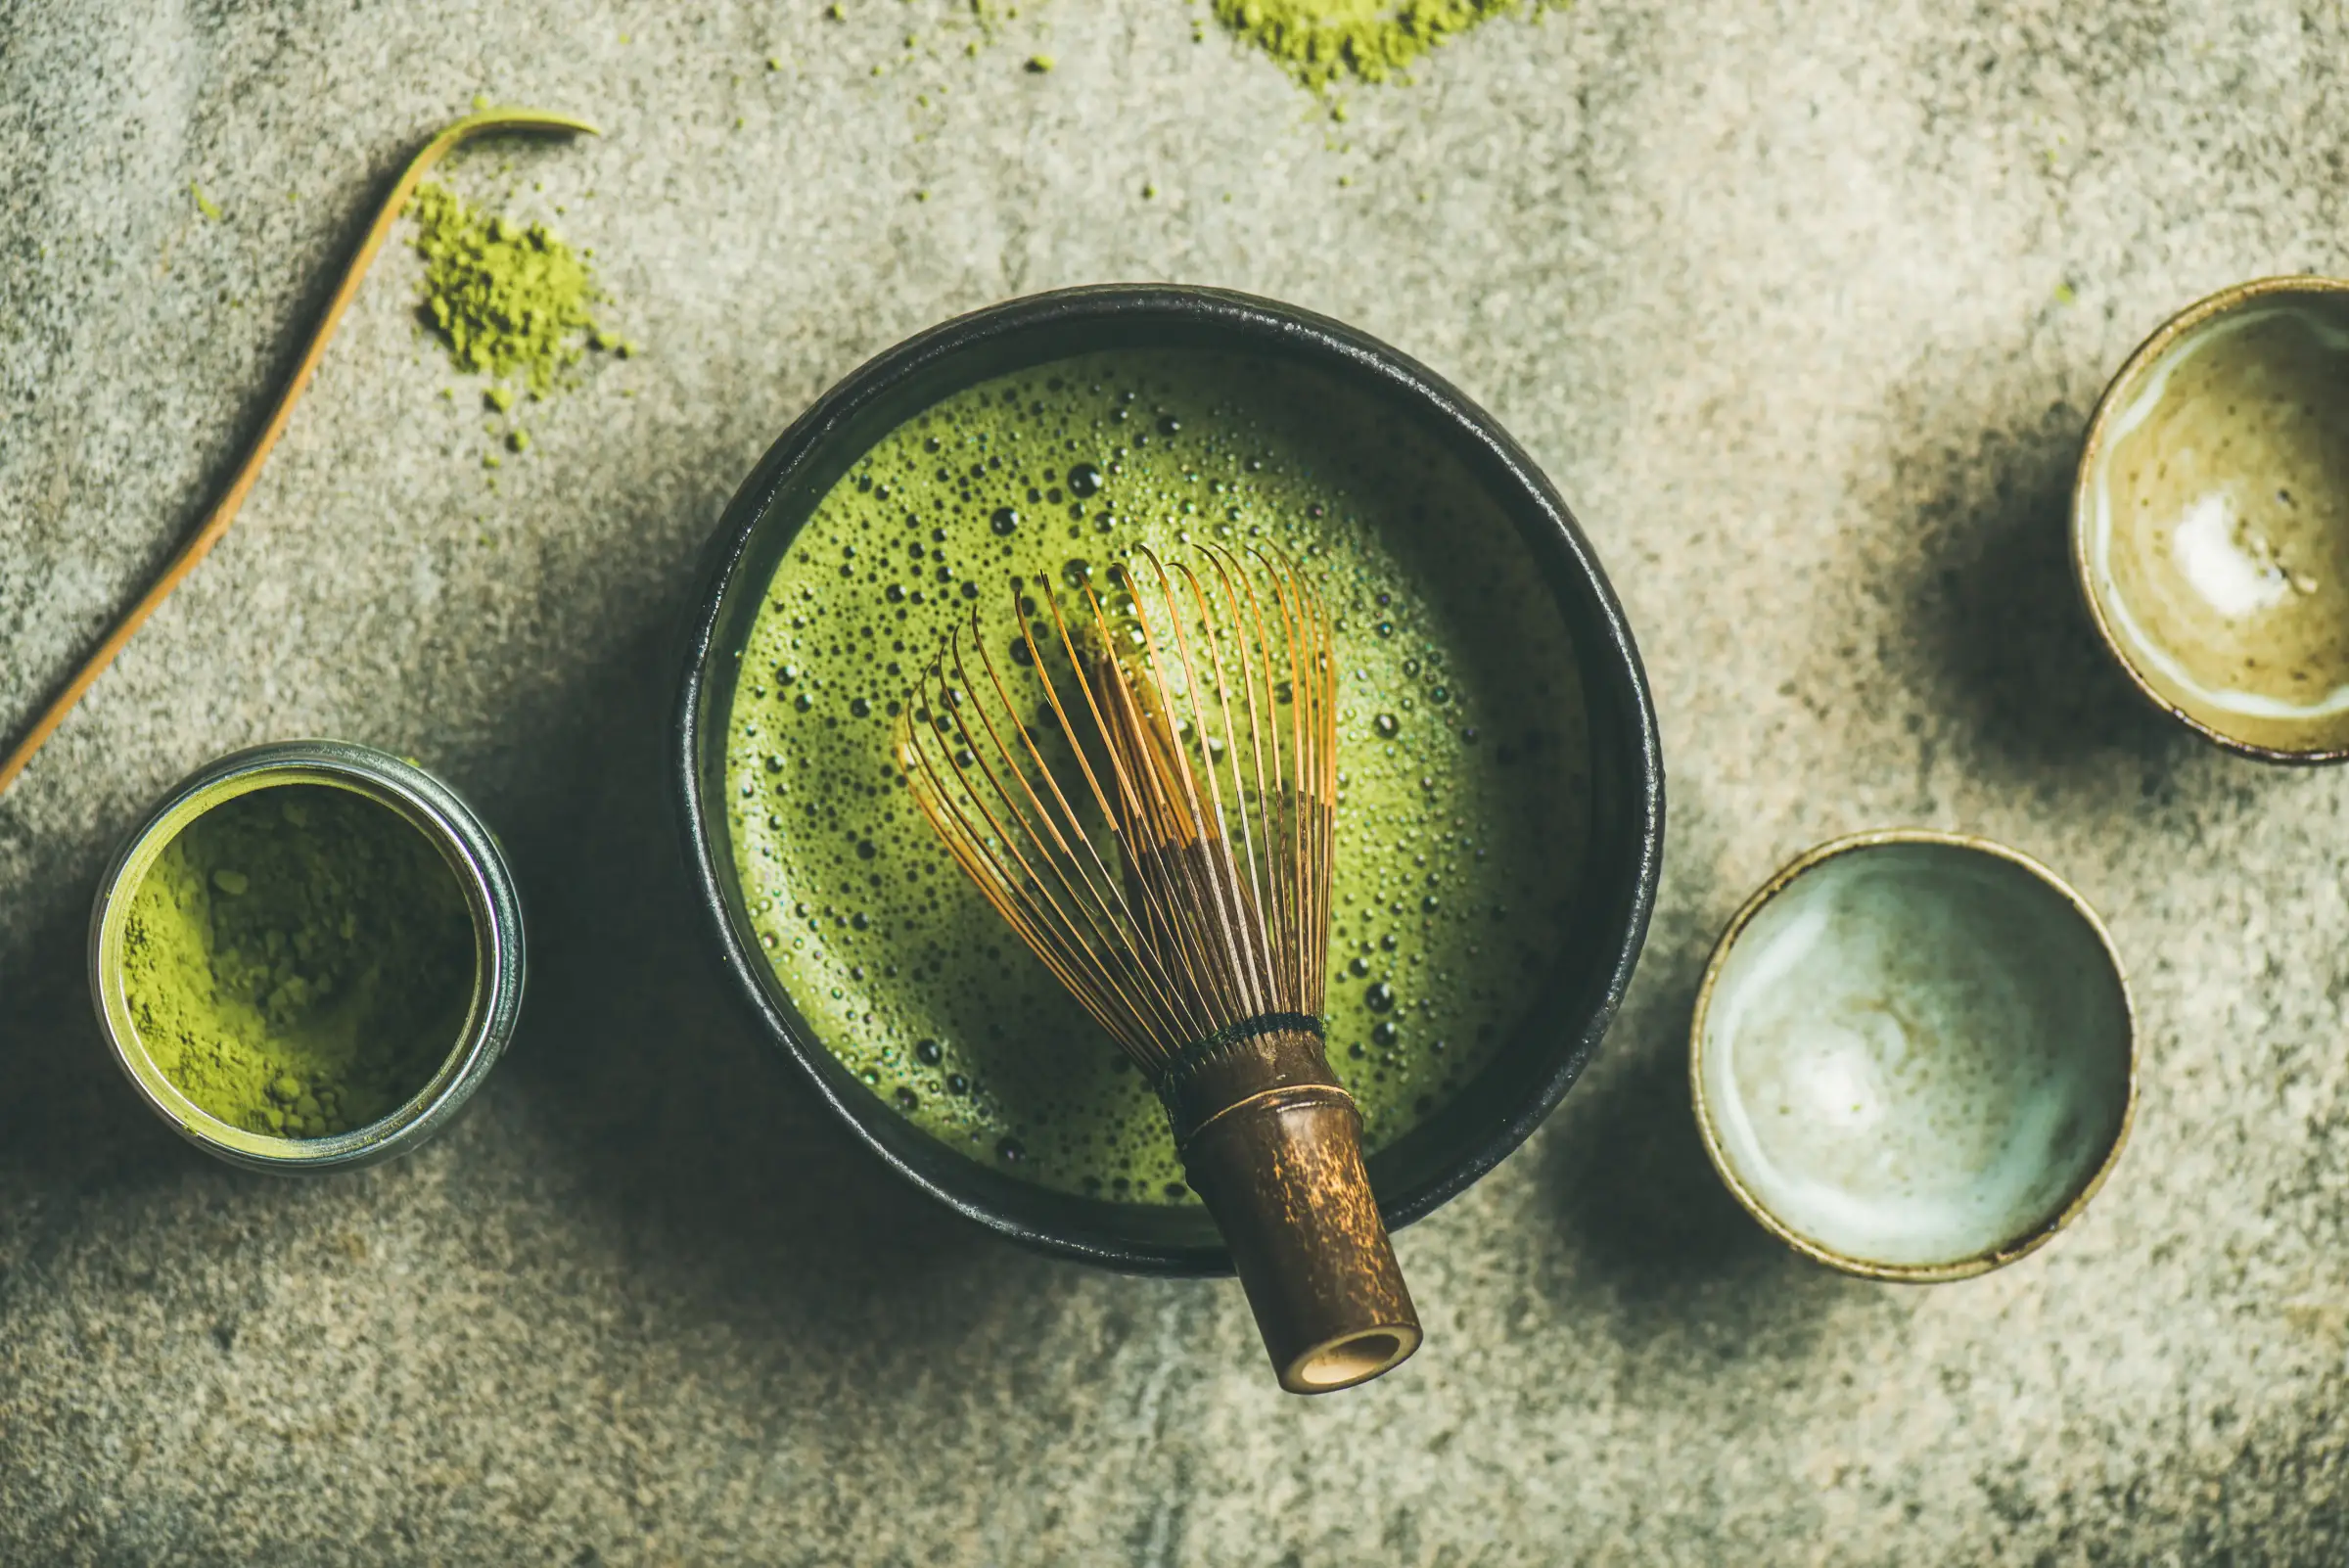 Japanese Matcha Green Tea and its Benefits